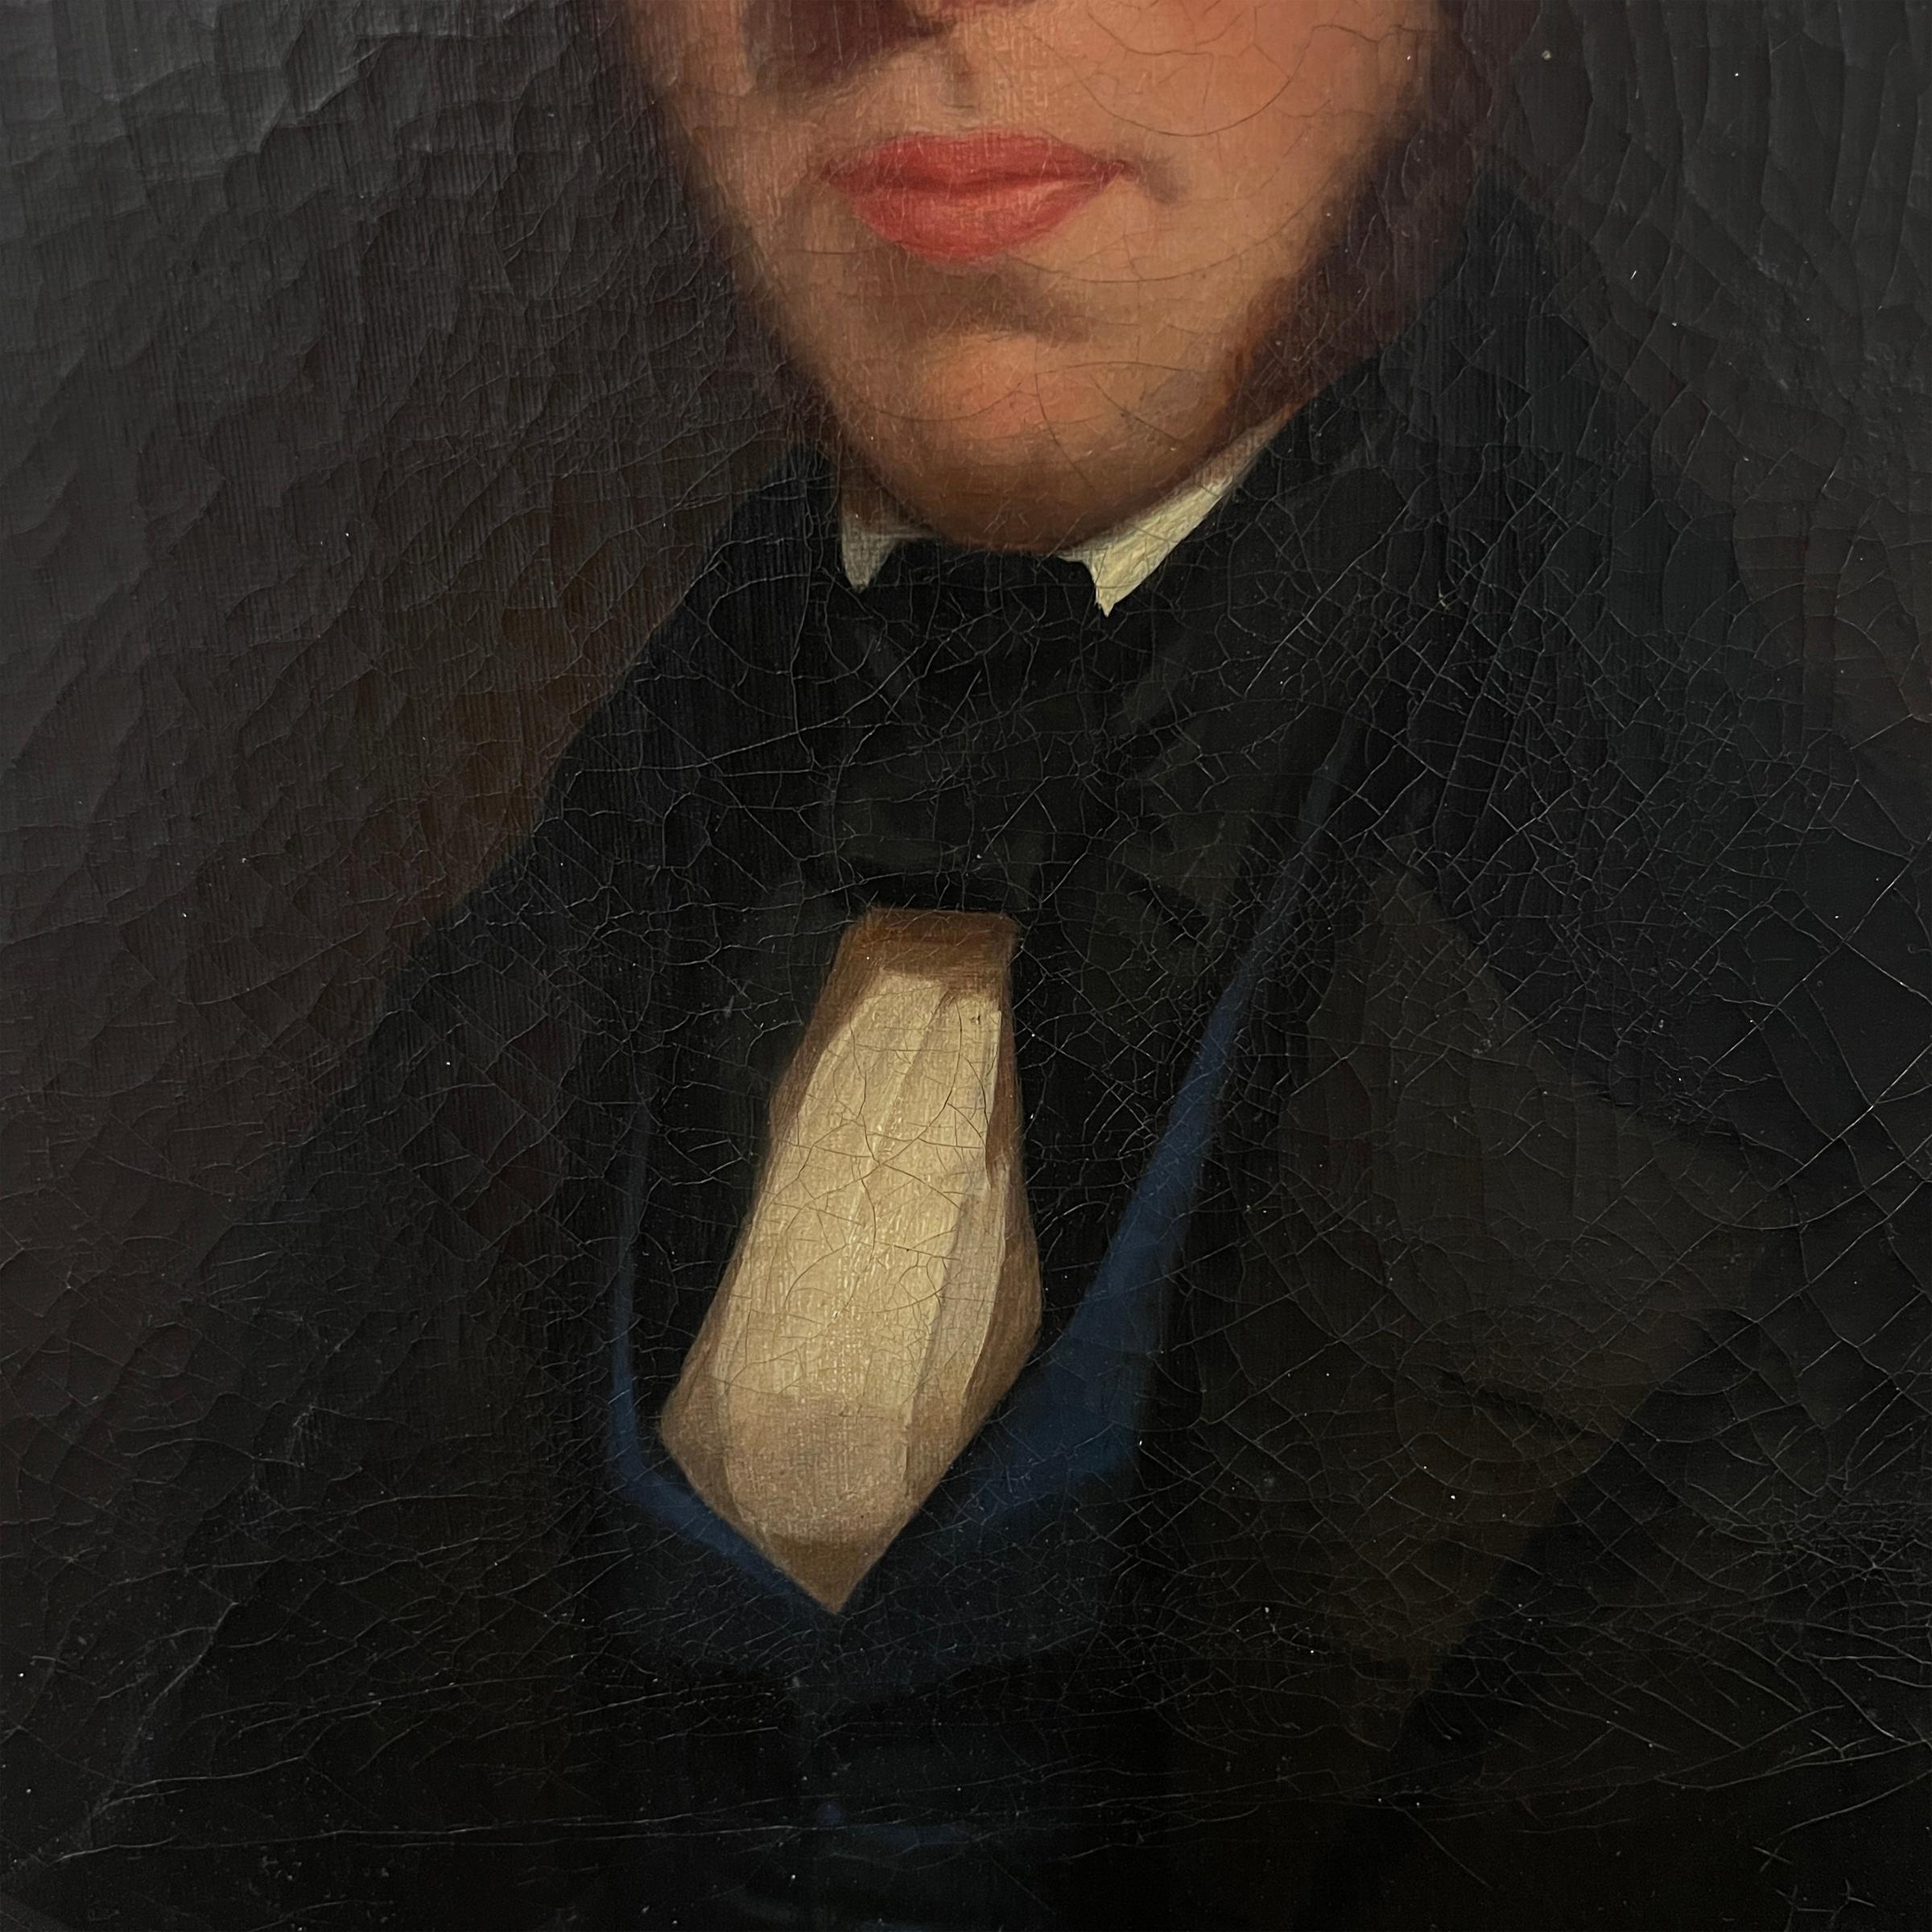 regency era portraits